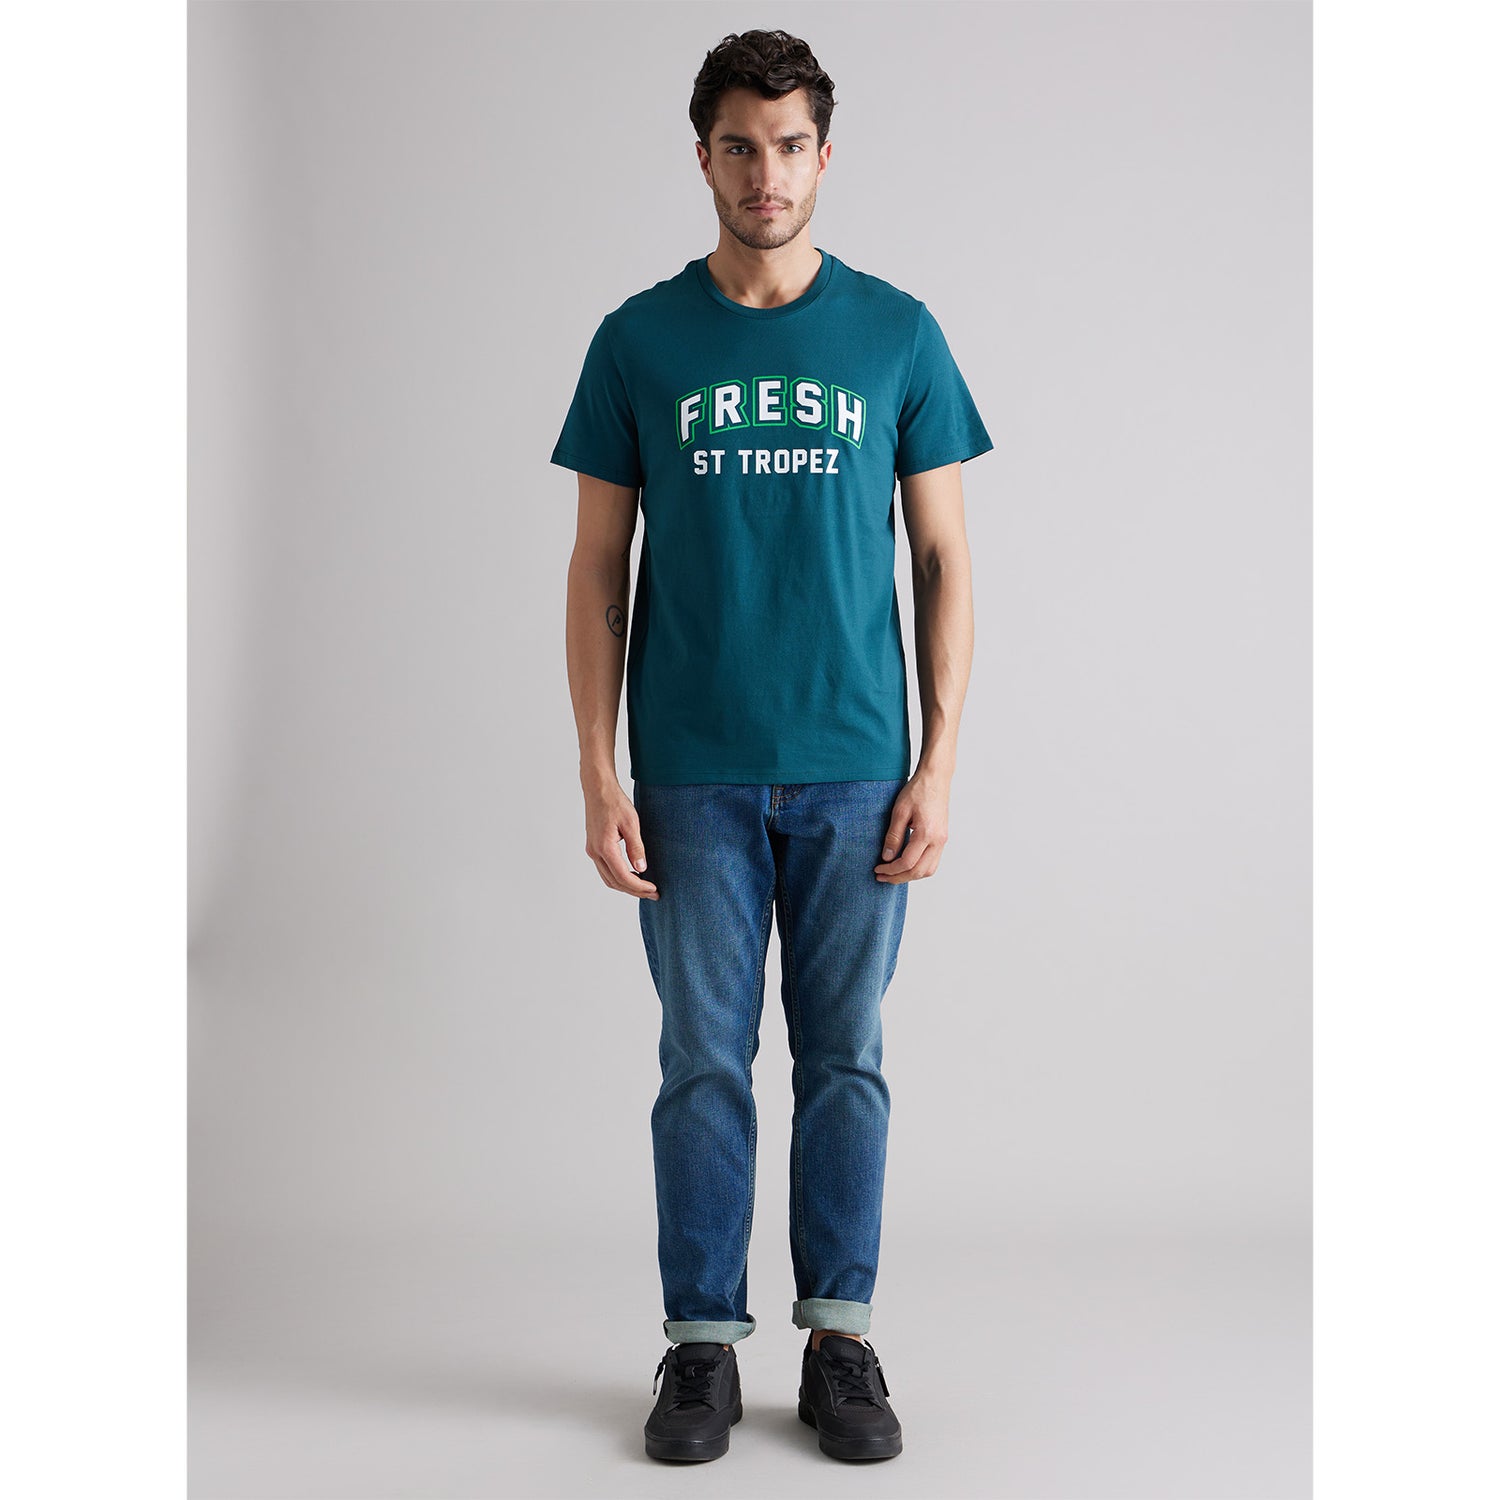 Men Graphic Print Green Short Sleeve T-shirt (Various Sizes)